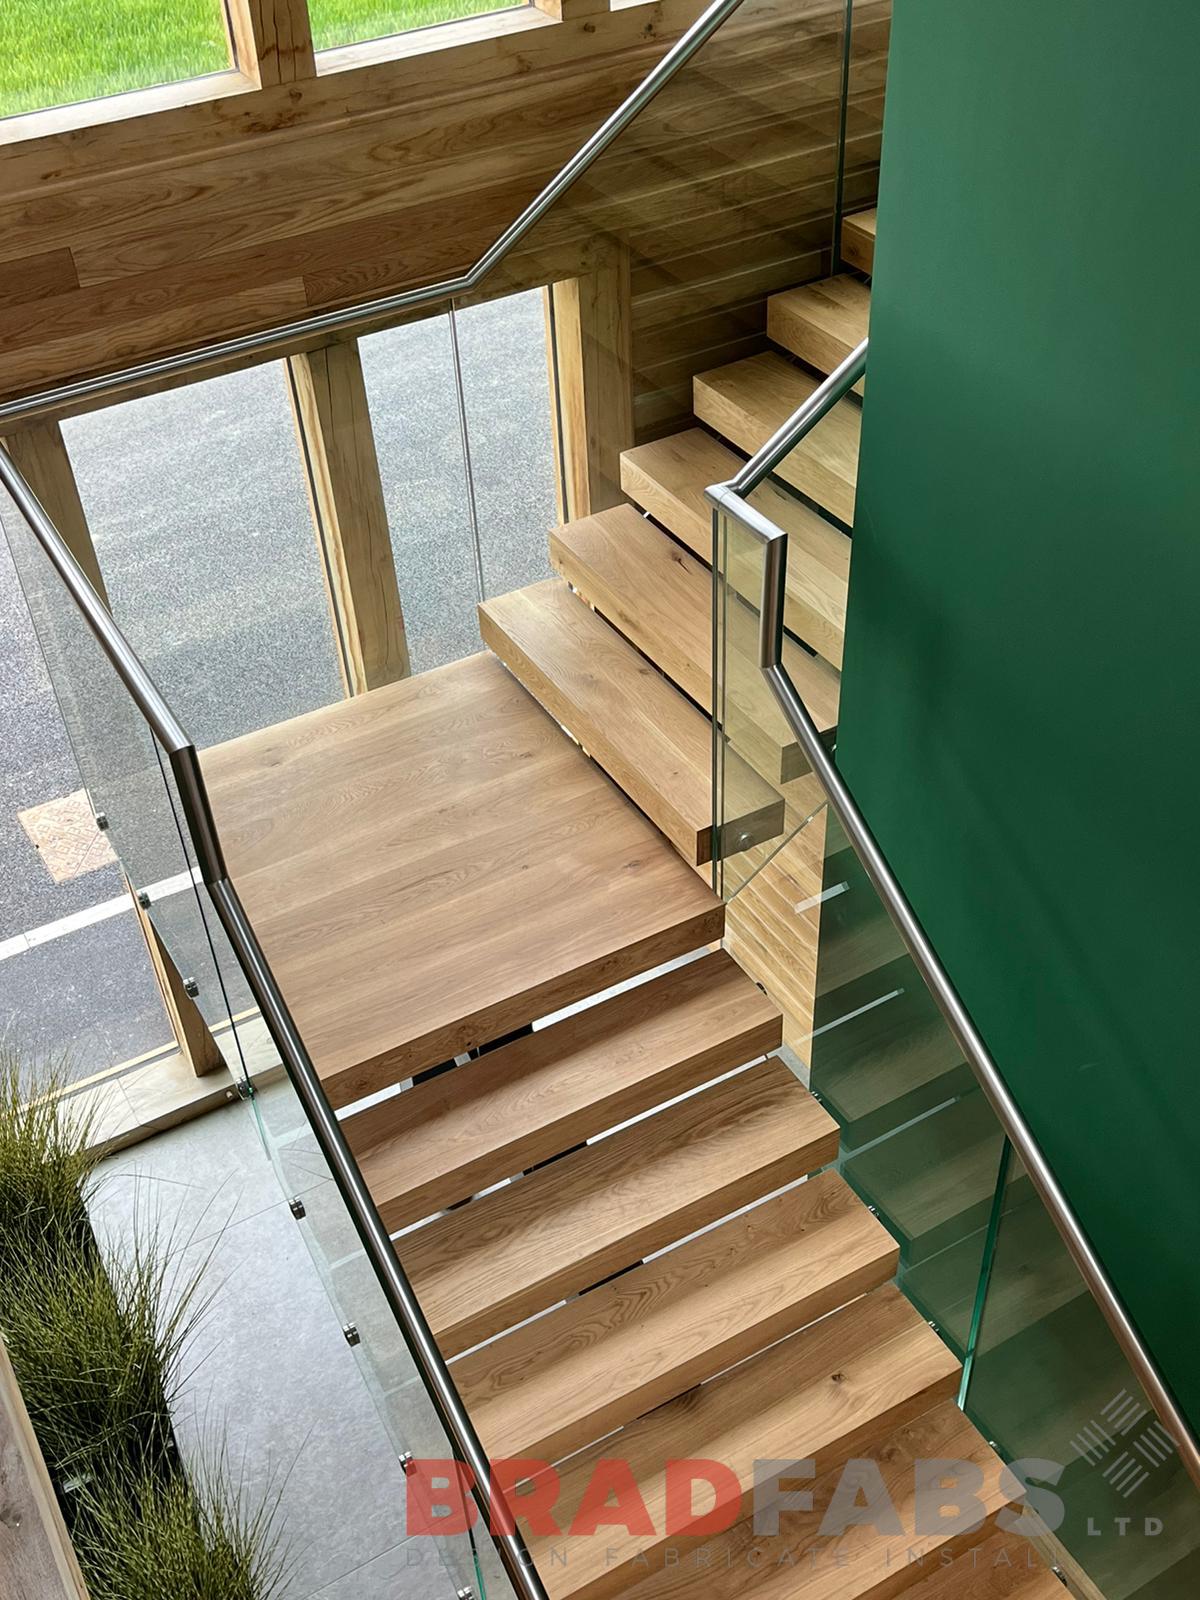 Bradfabs, stainless steel top rail, infinity glass, internal staircase, oak treads 